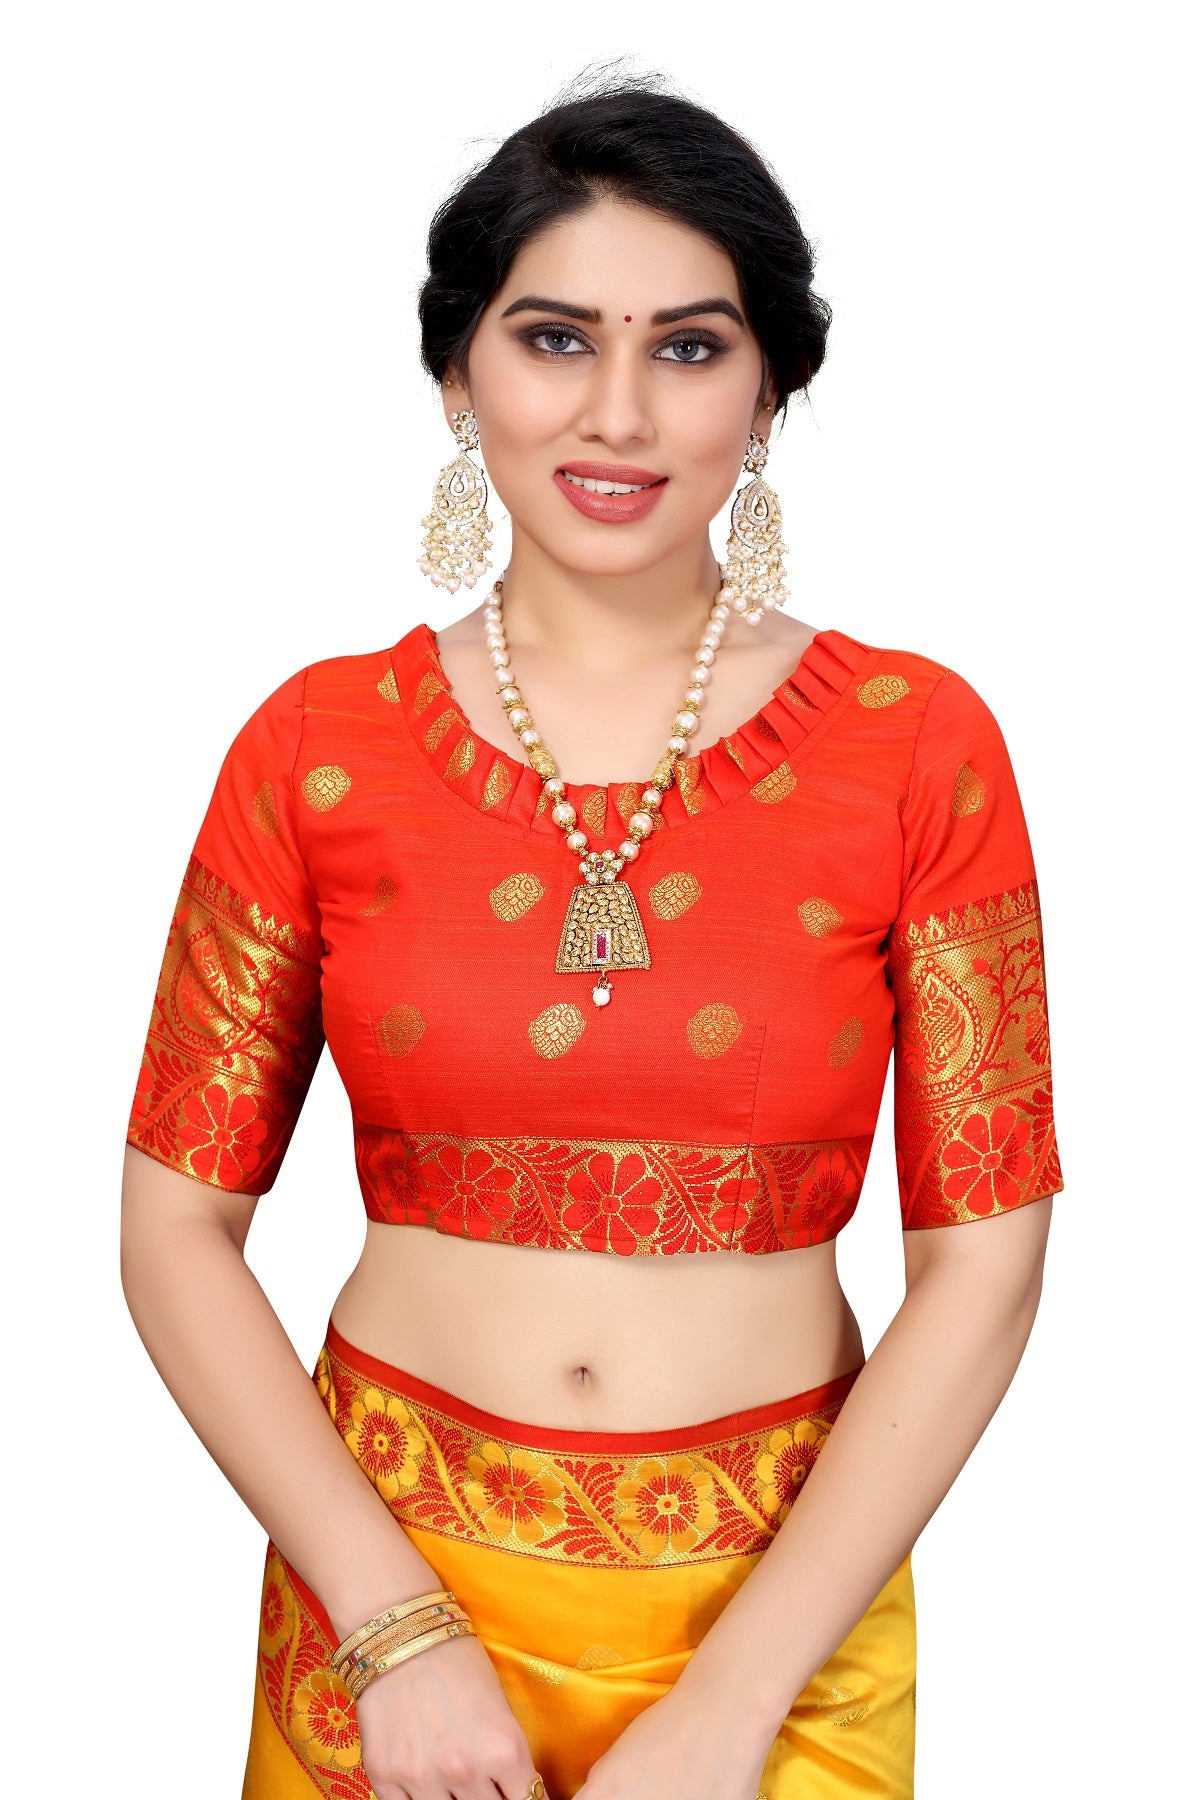 Women's Cotton Rich Silk With Jacquard Weaving Yellow Saree - Vamika